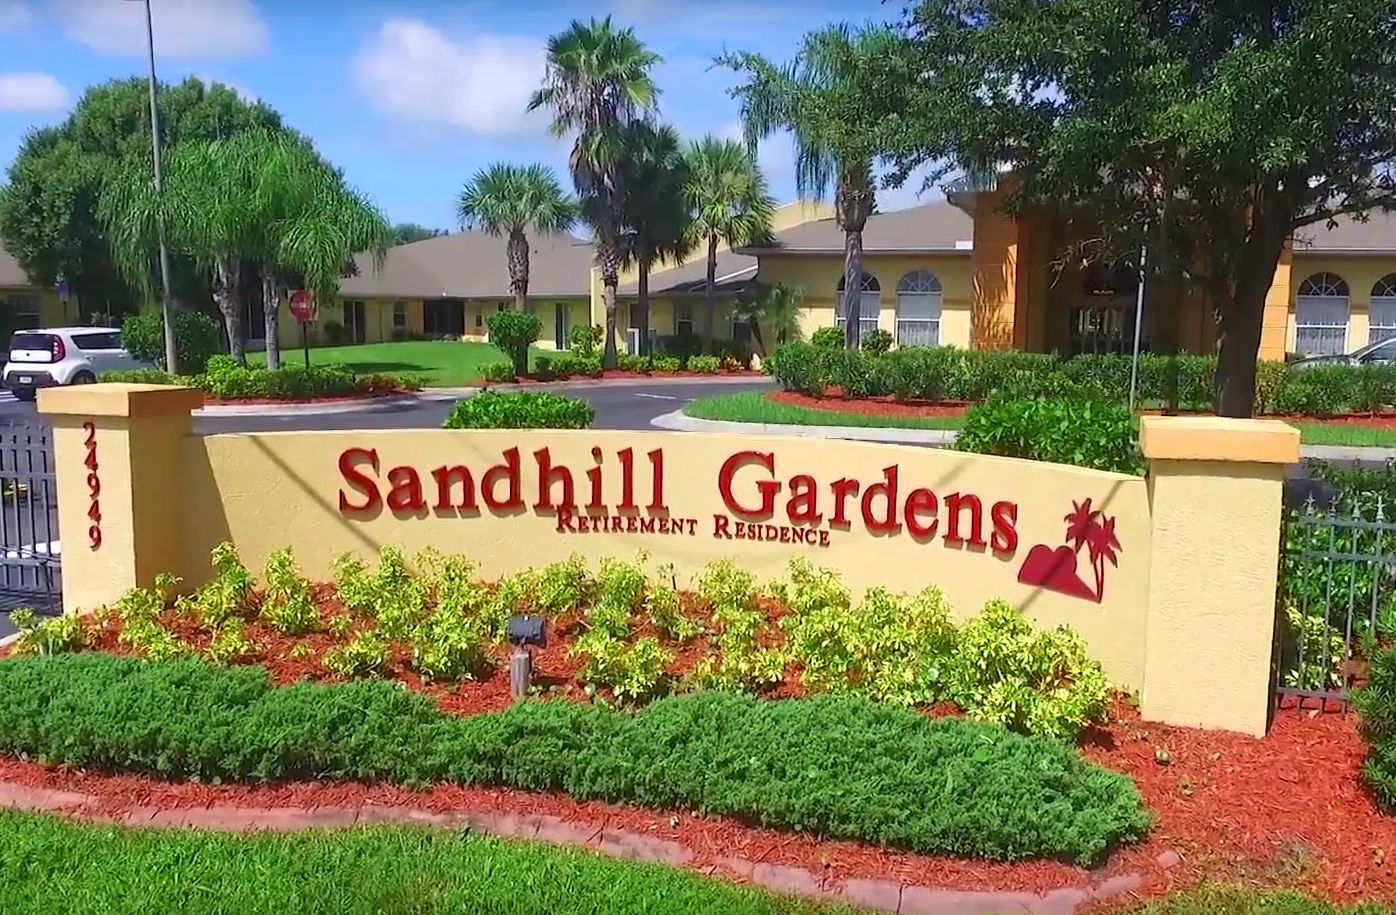 Sandhill Gardens Retirement Residence, undefined, undefined 3